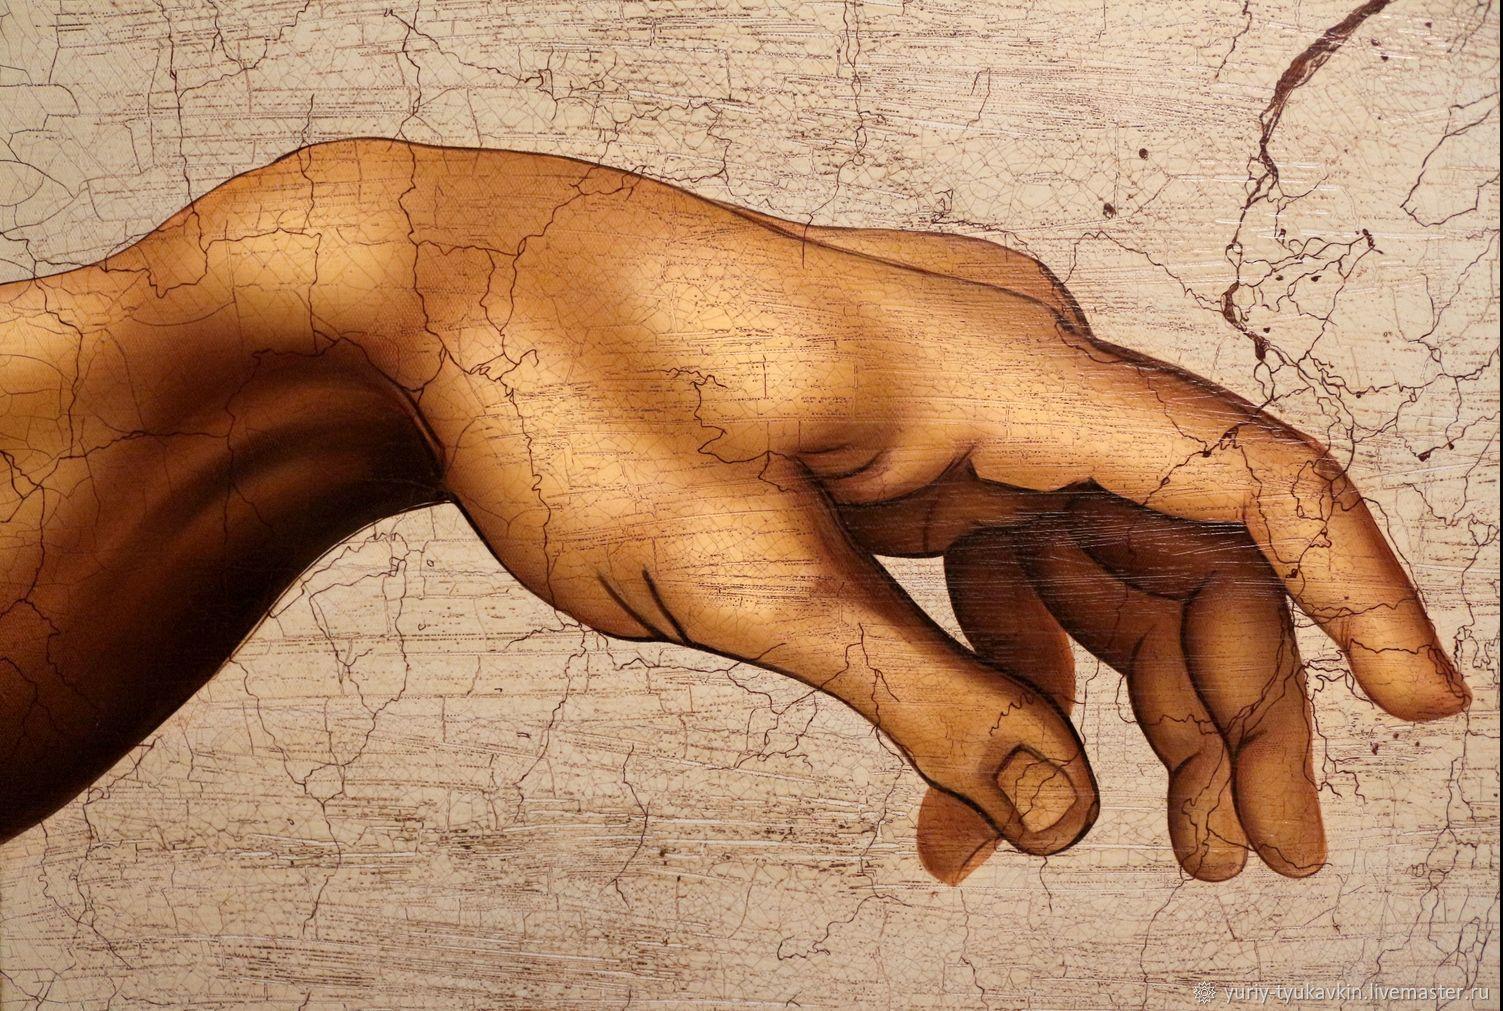 Руки человека рассказ. Микеланджело Сотворение Адама. Микеланджело Буонарроти Сотворение Адама руки. "Сотворение Адама" Микеланджело, 1511. Леонардо да Винчи Сотворение Адама.